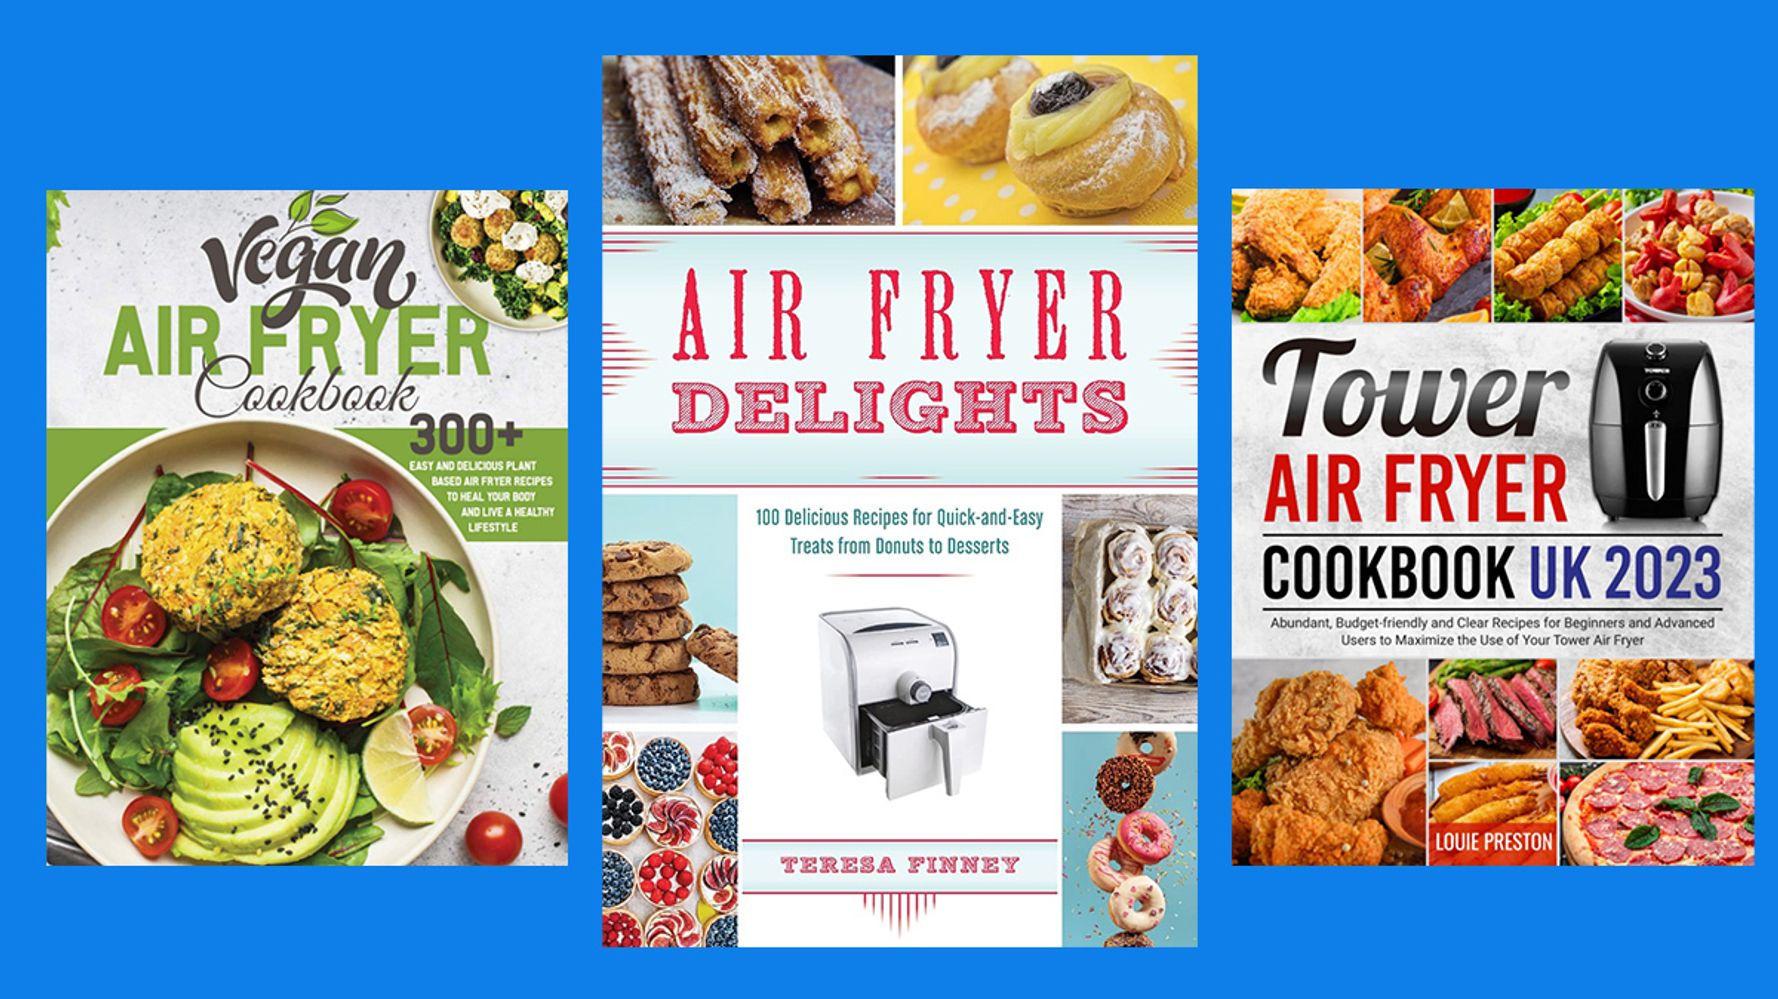 Ninja Air Fryer Cookbook for Beginners: 1000-Day Healthier, Easier